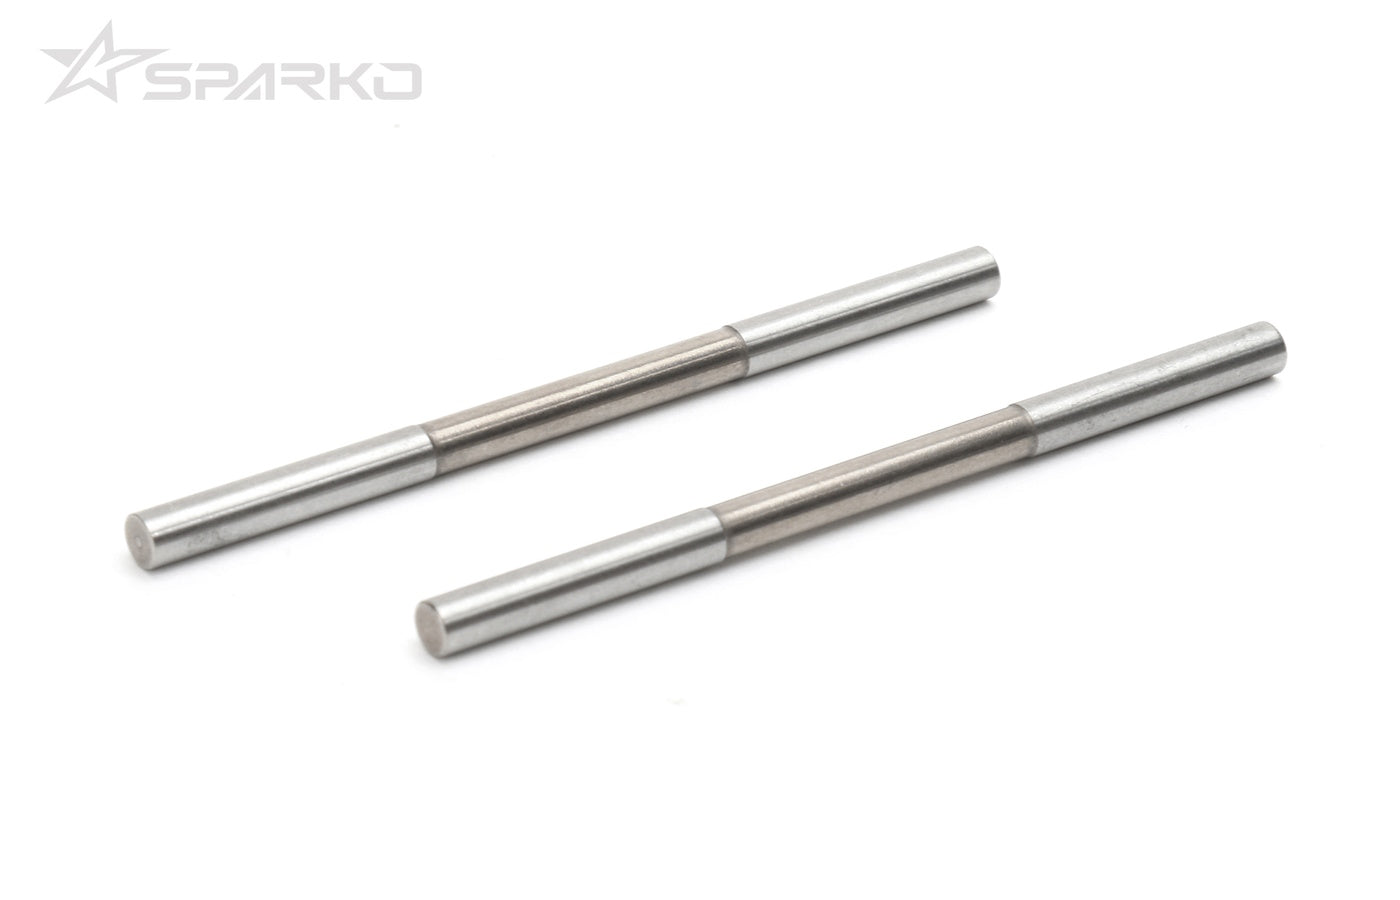 Powerhobby Sparko F8 Lower Arm Hinge Pin (70mm) (2pcs) - PowerHobby